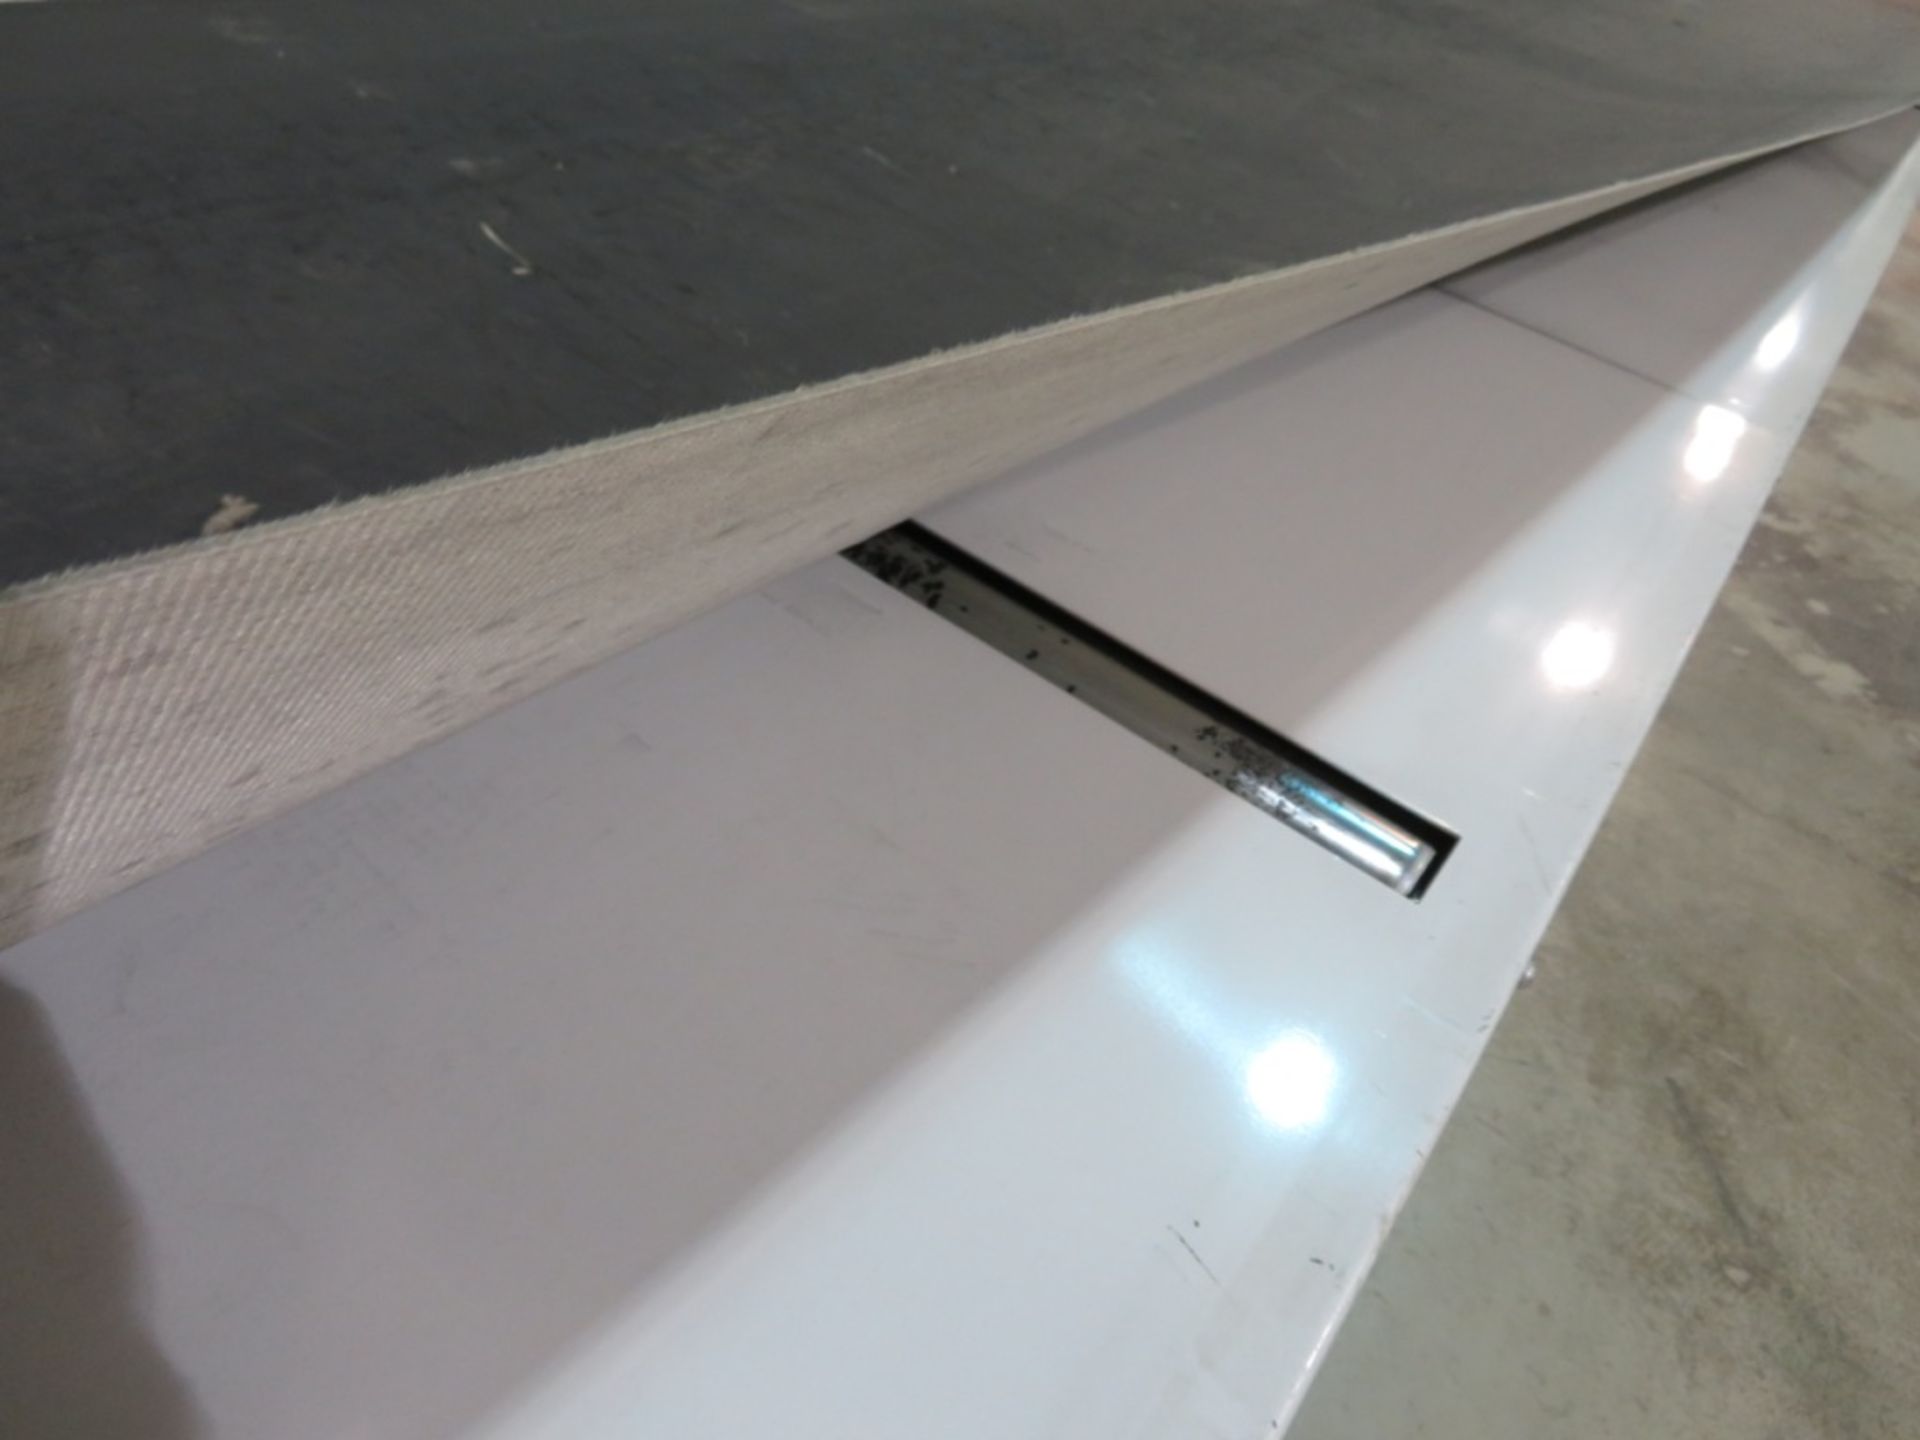 Portec open ended conveyour belt system - Belt width 1.2m (1.3m total width) 0.75m high - - Image 13 of 14